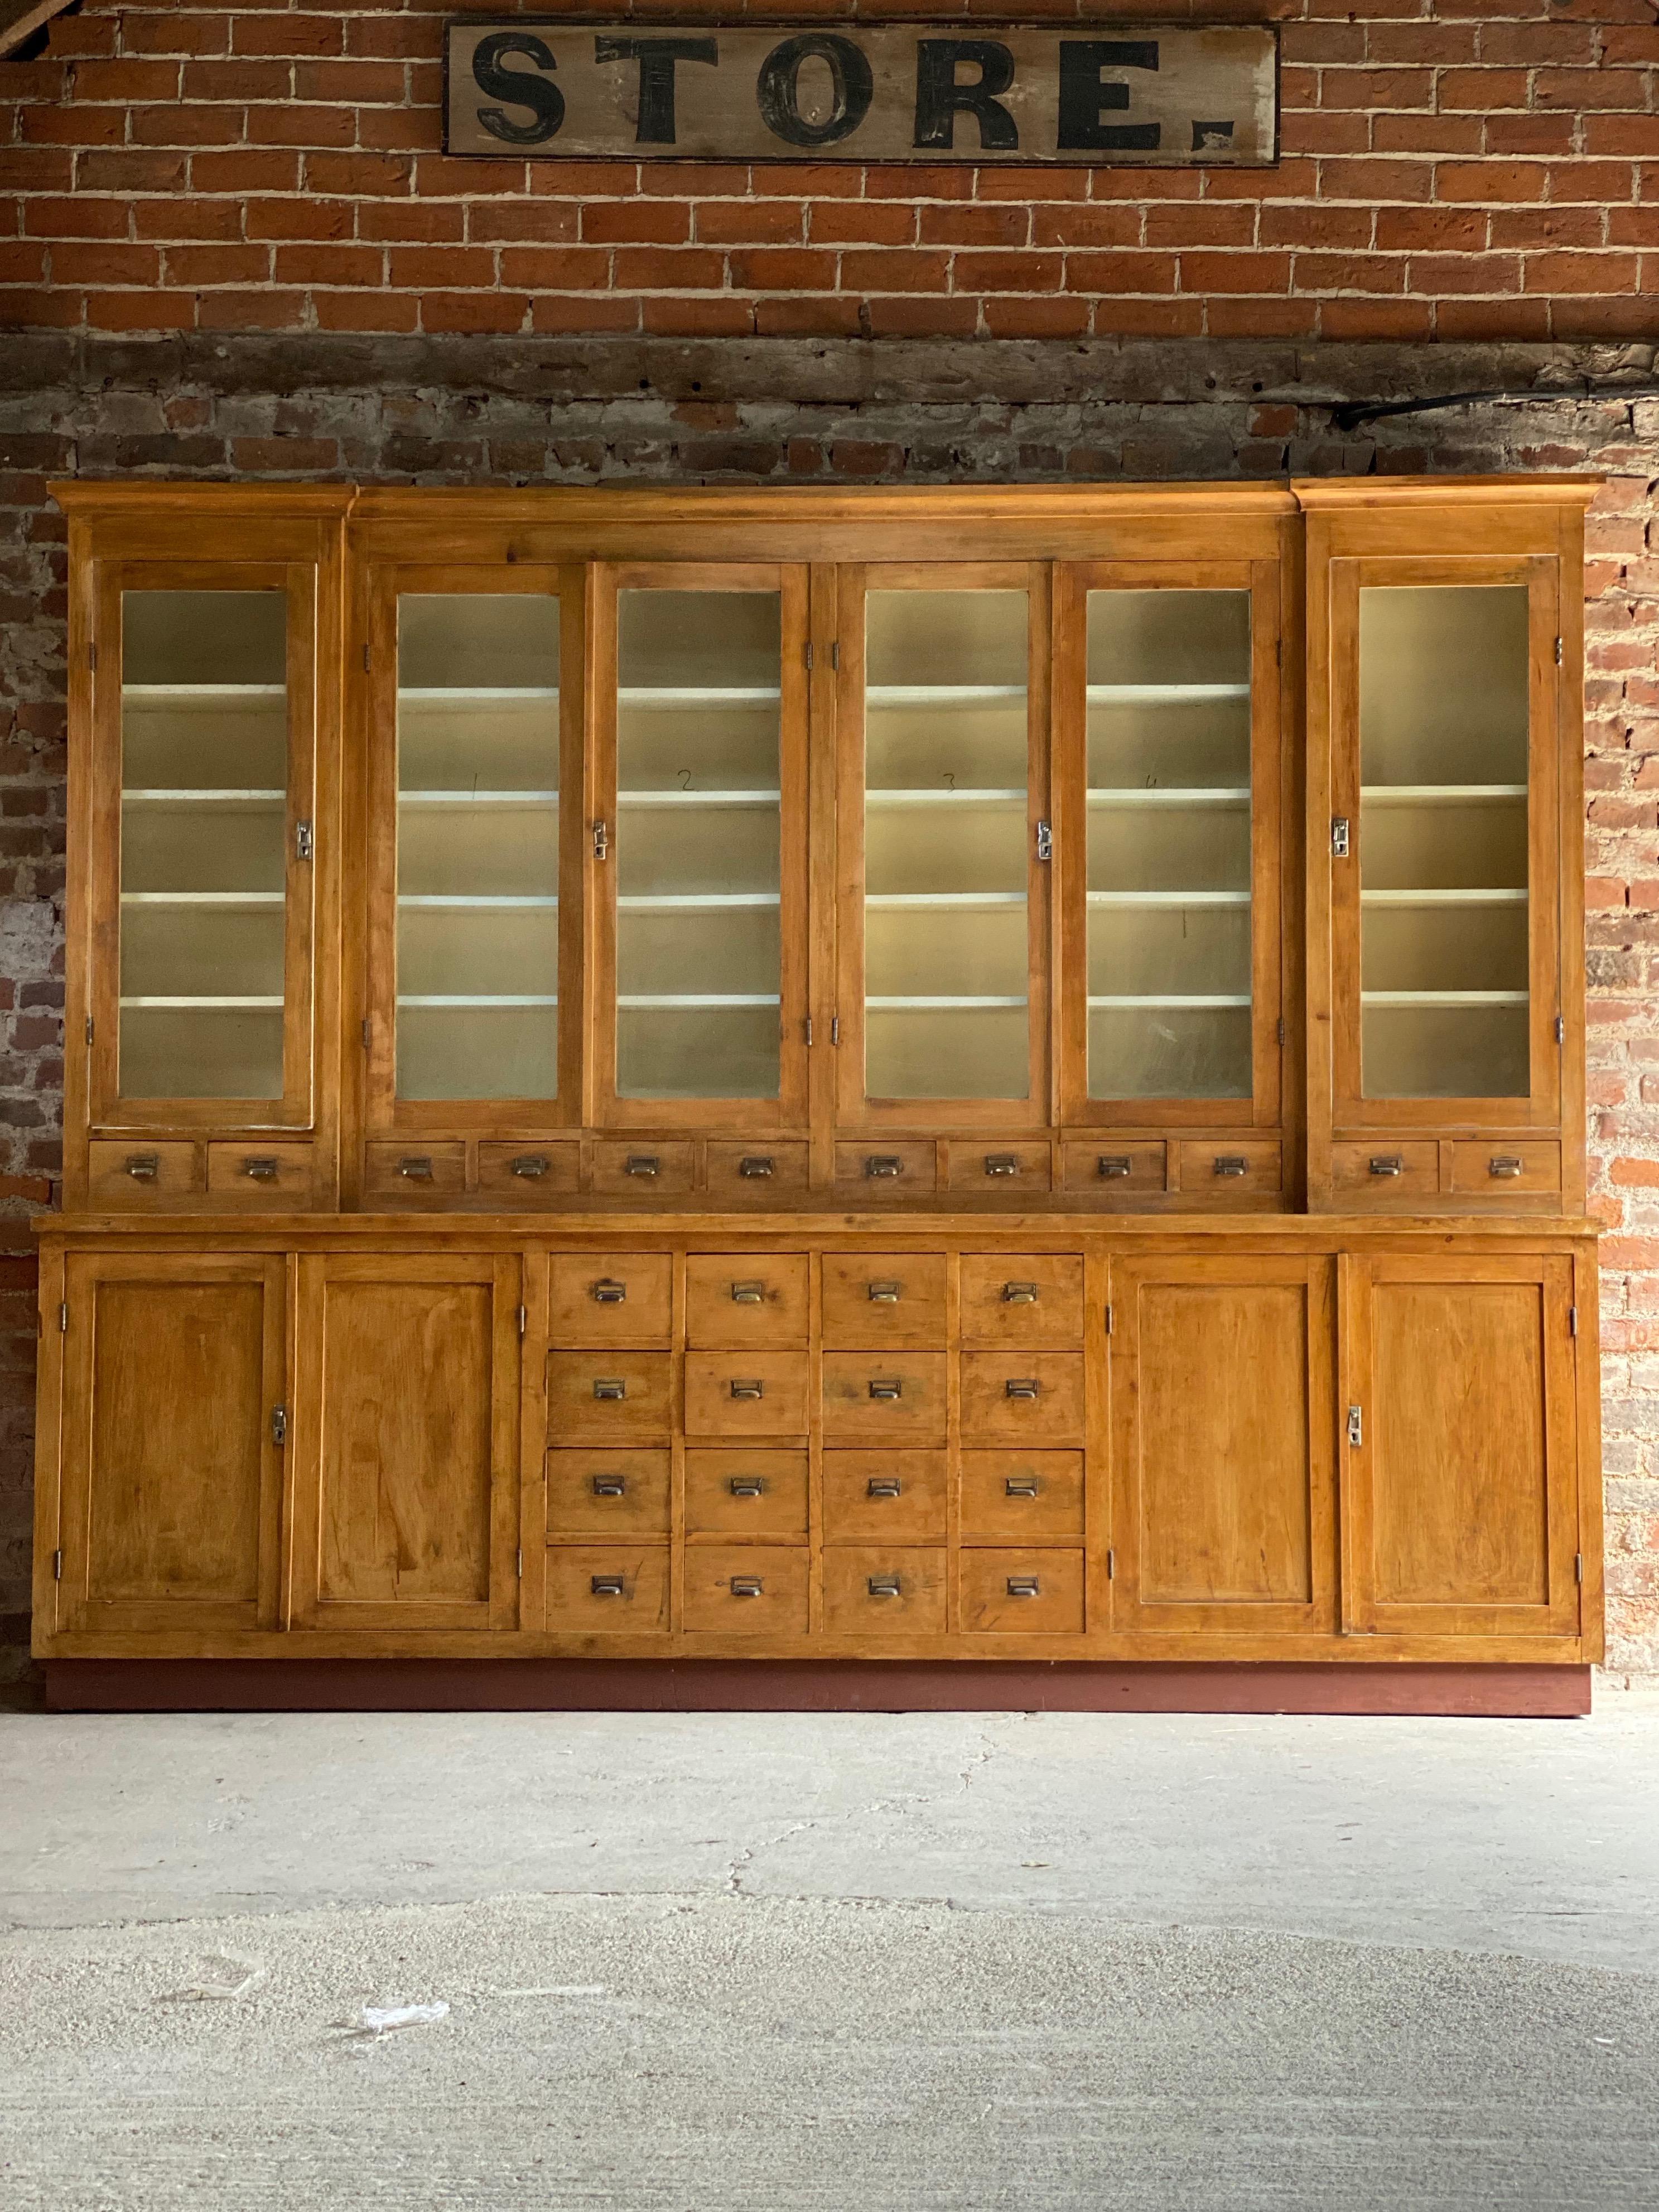 vintage pharmacy cabinet